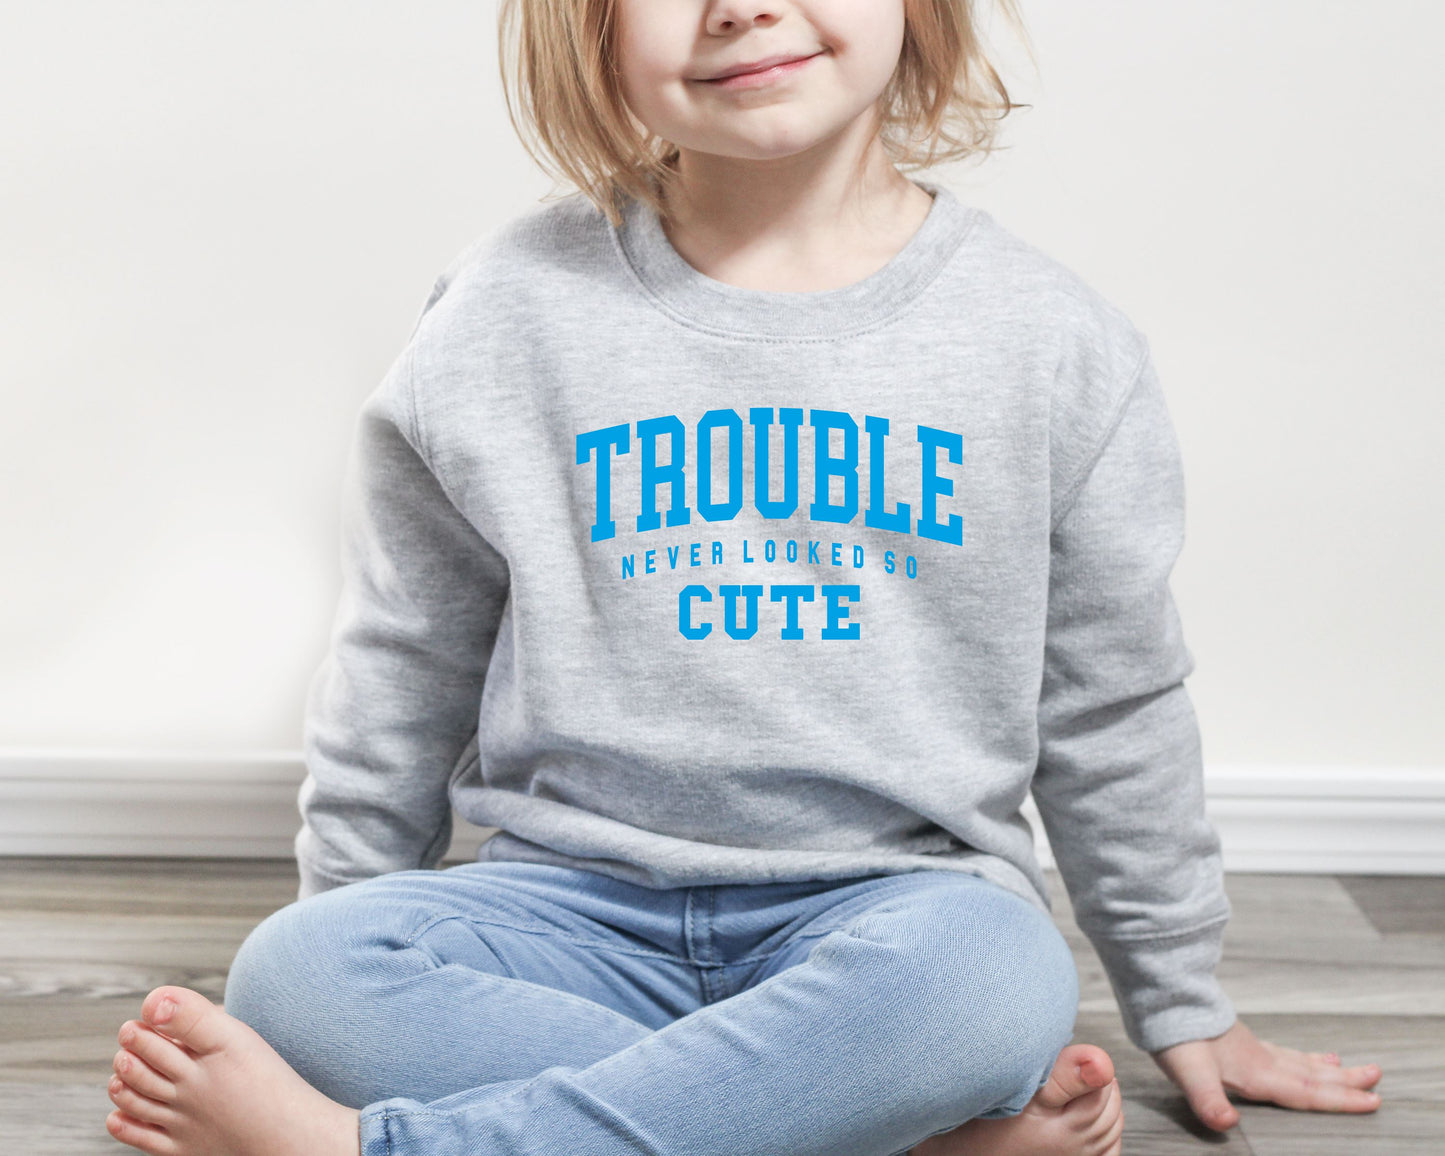 Trouble Never Looked So Cute Kids Slogan Sweatshirt